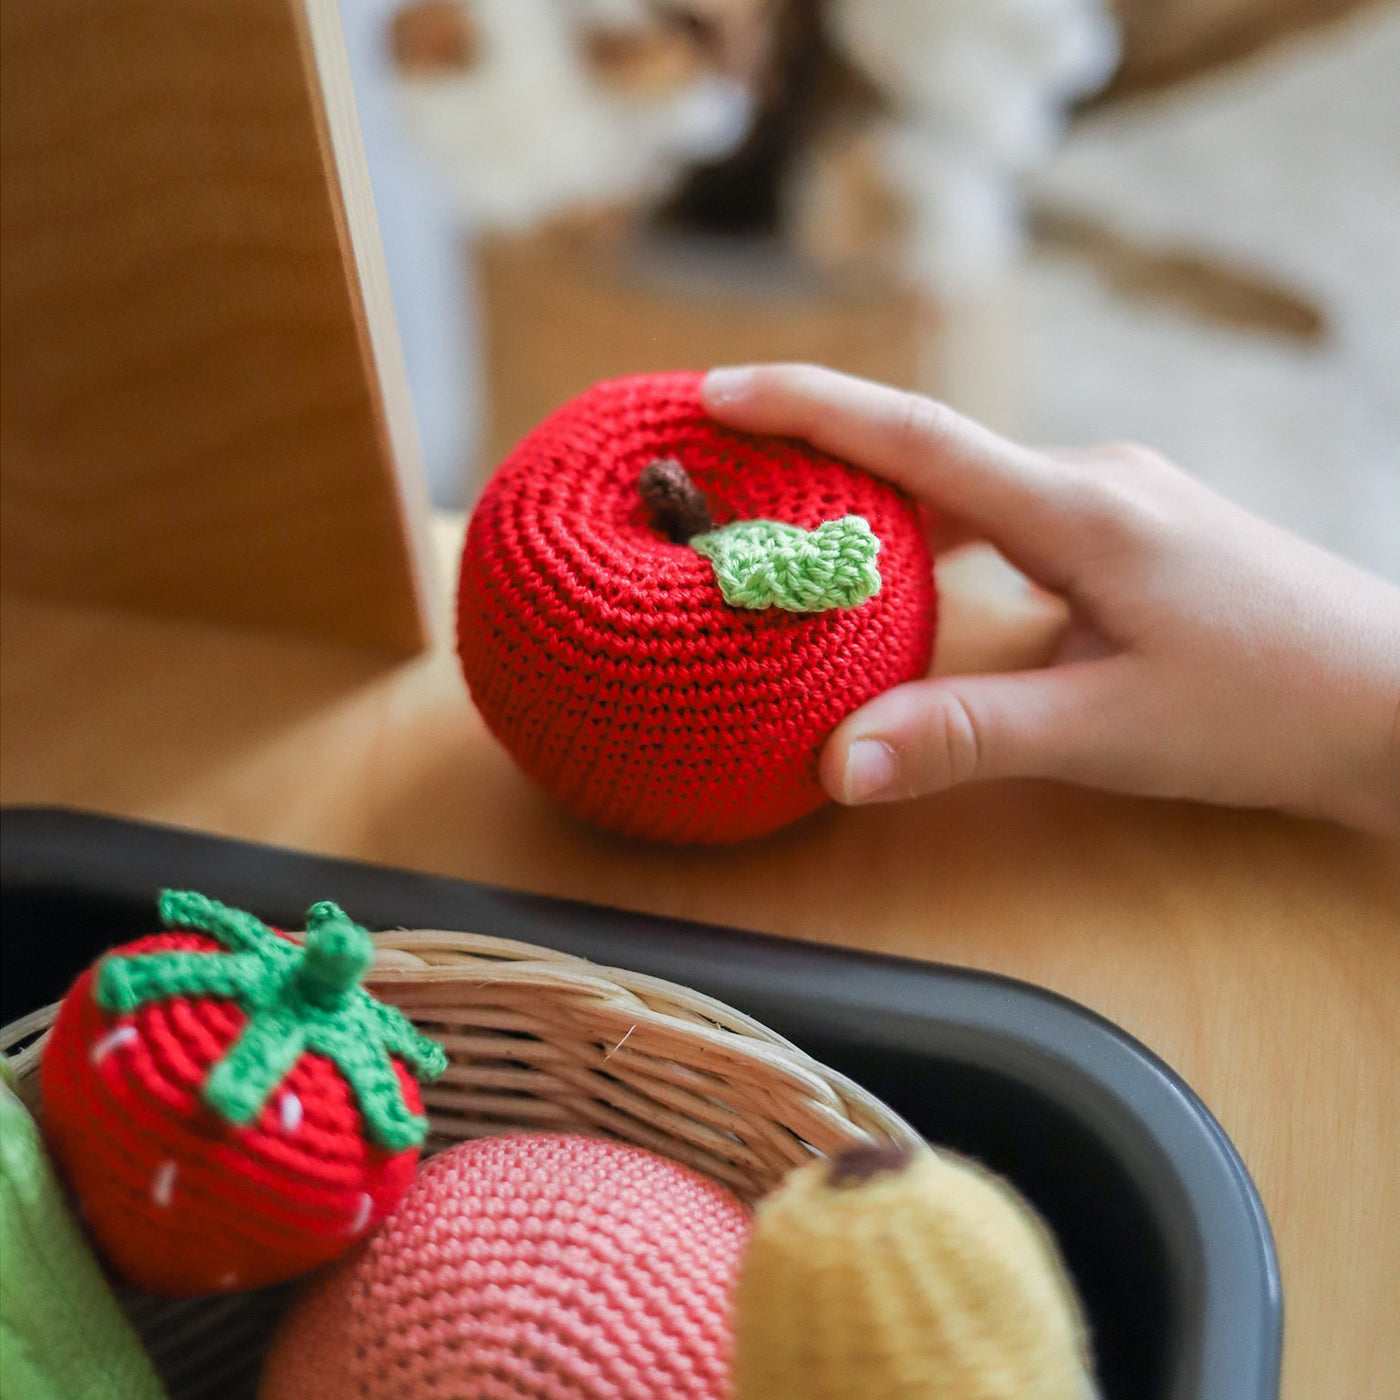 Classic Fruit Toy Set - 5 handmade pieces